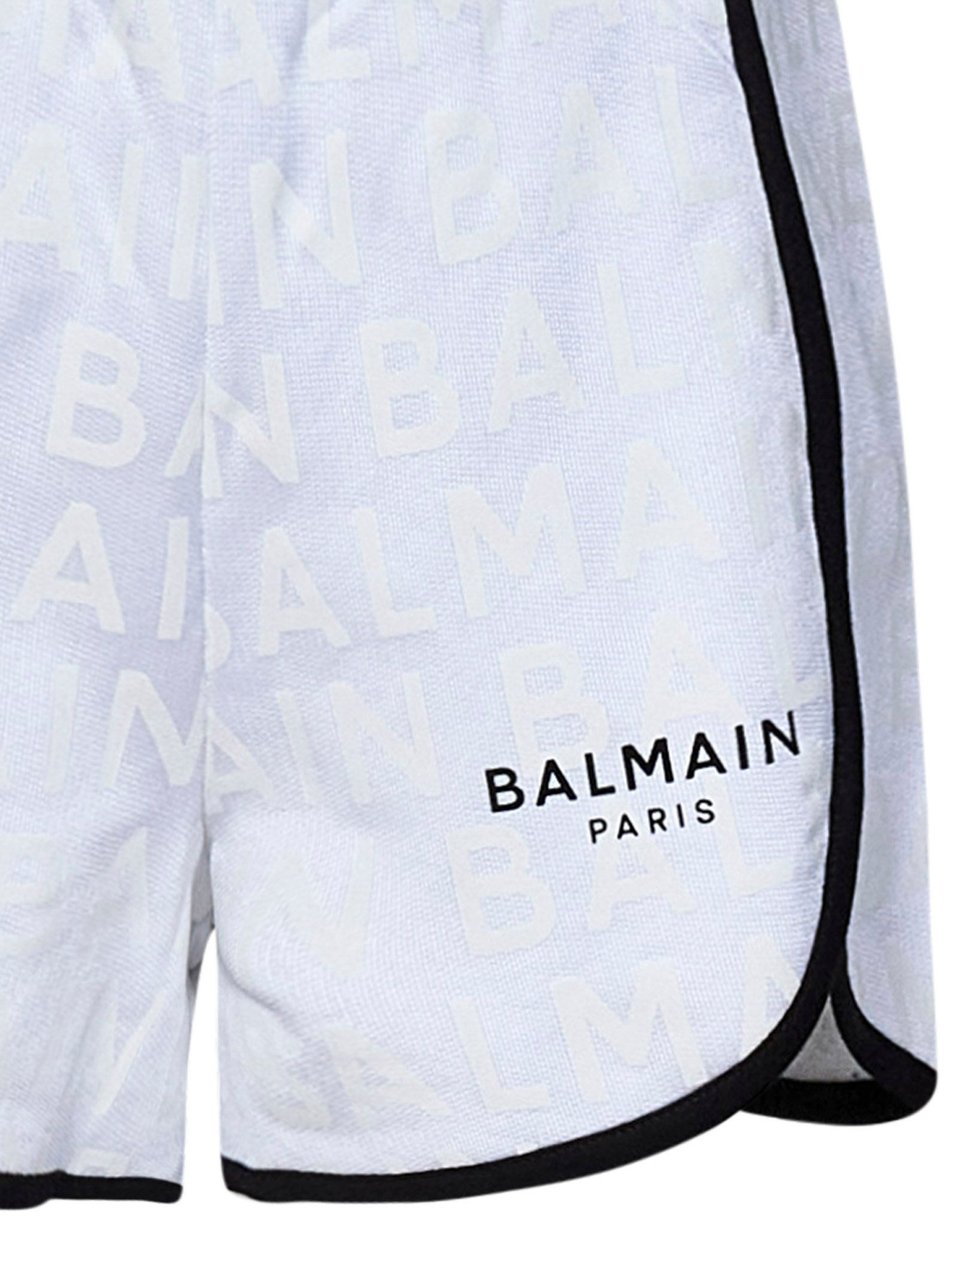 Balmain Balmain Shorts White Wit